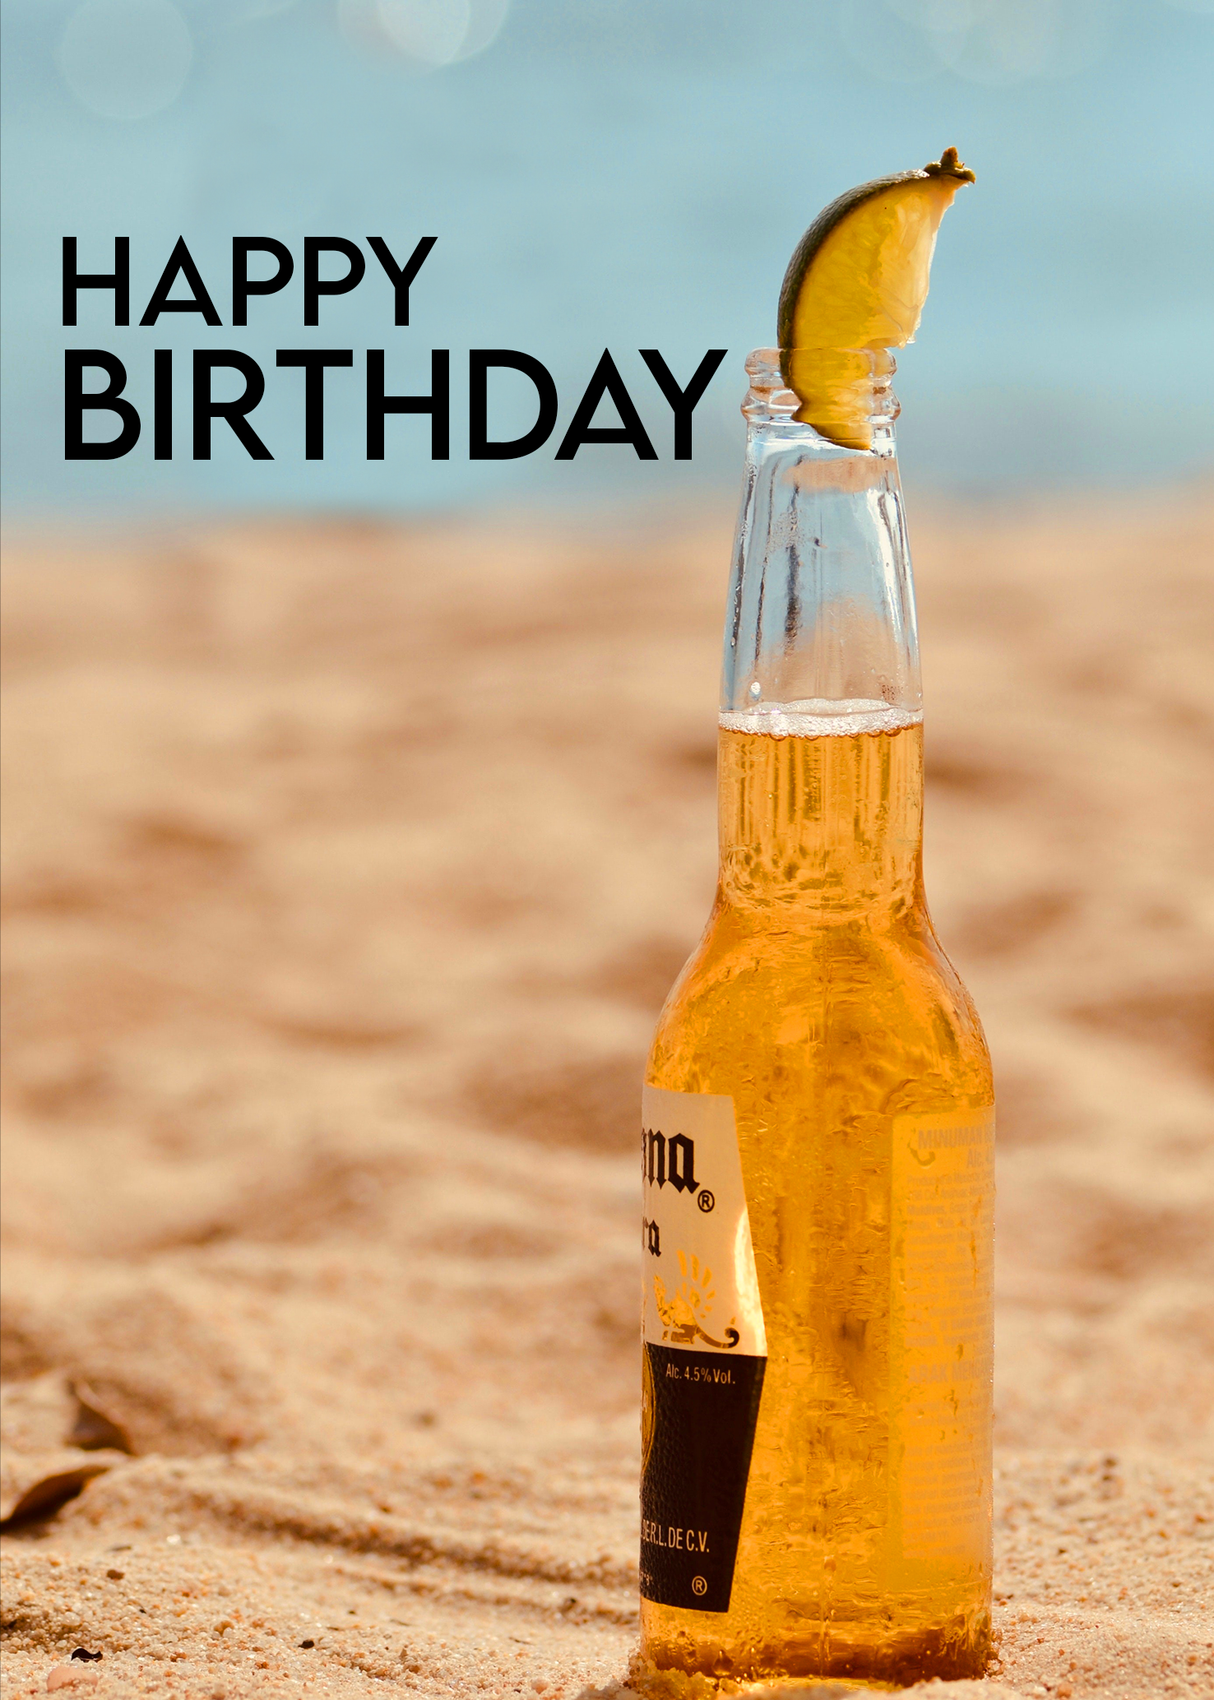 Happy Birthday Beach Beer